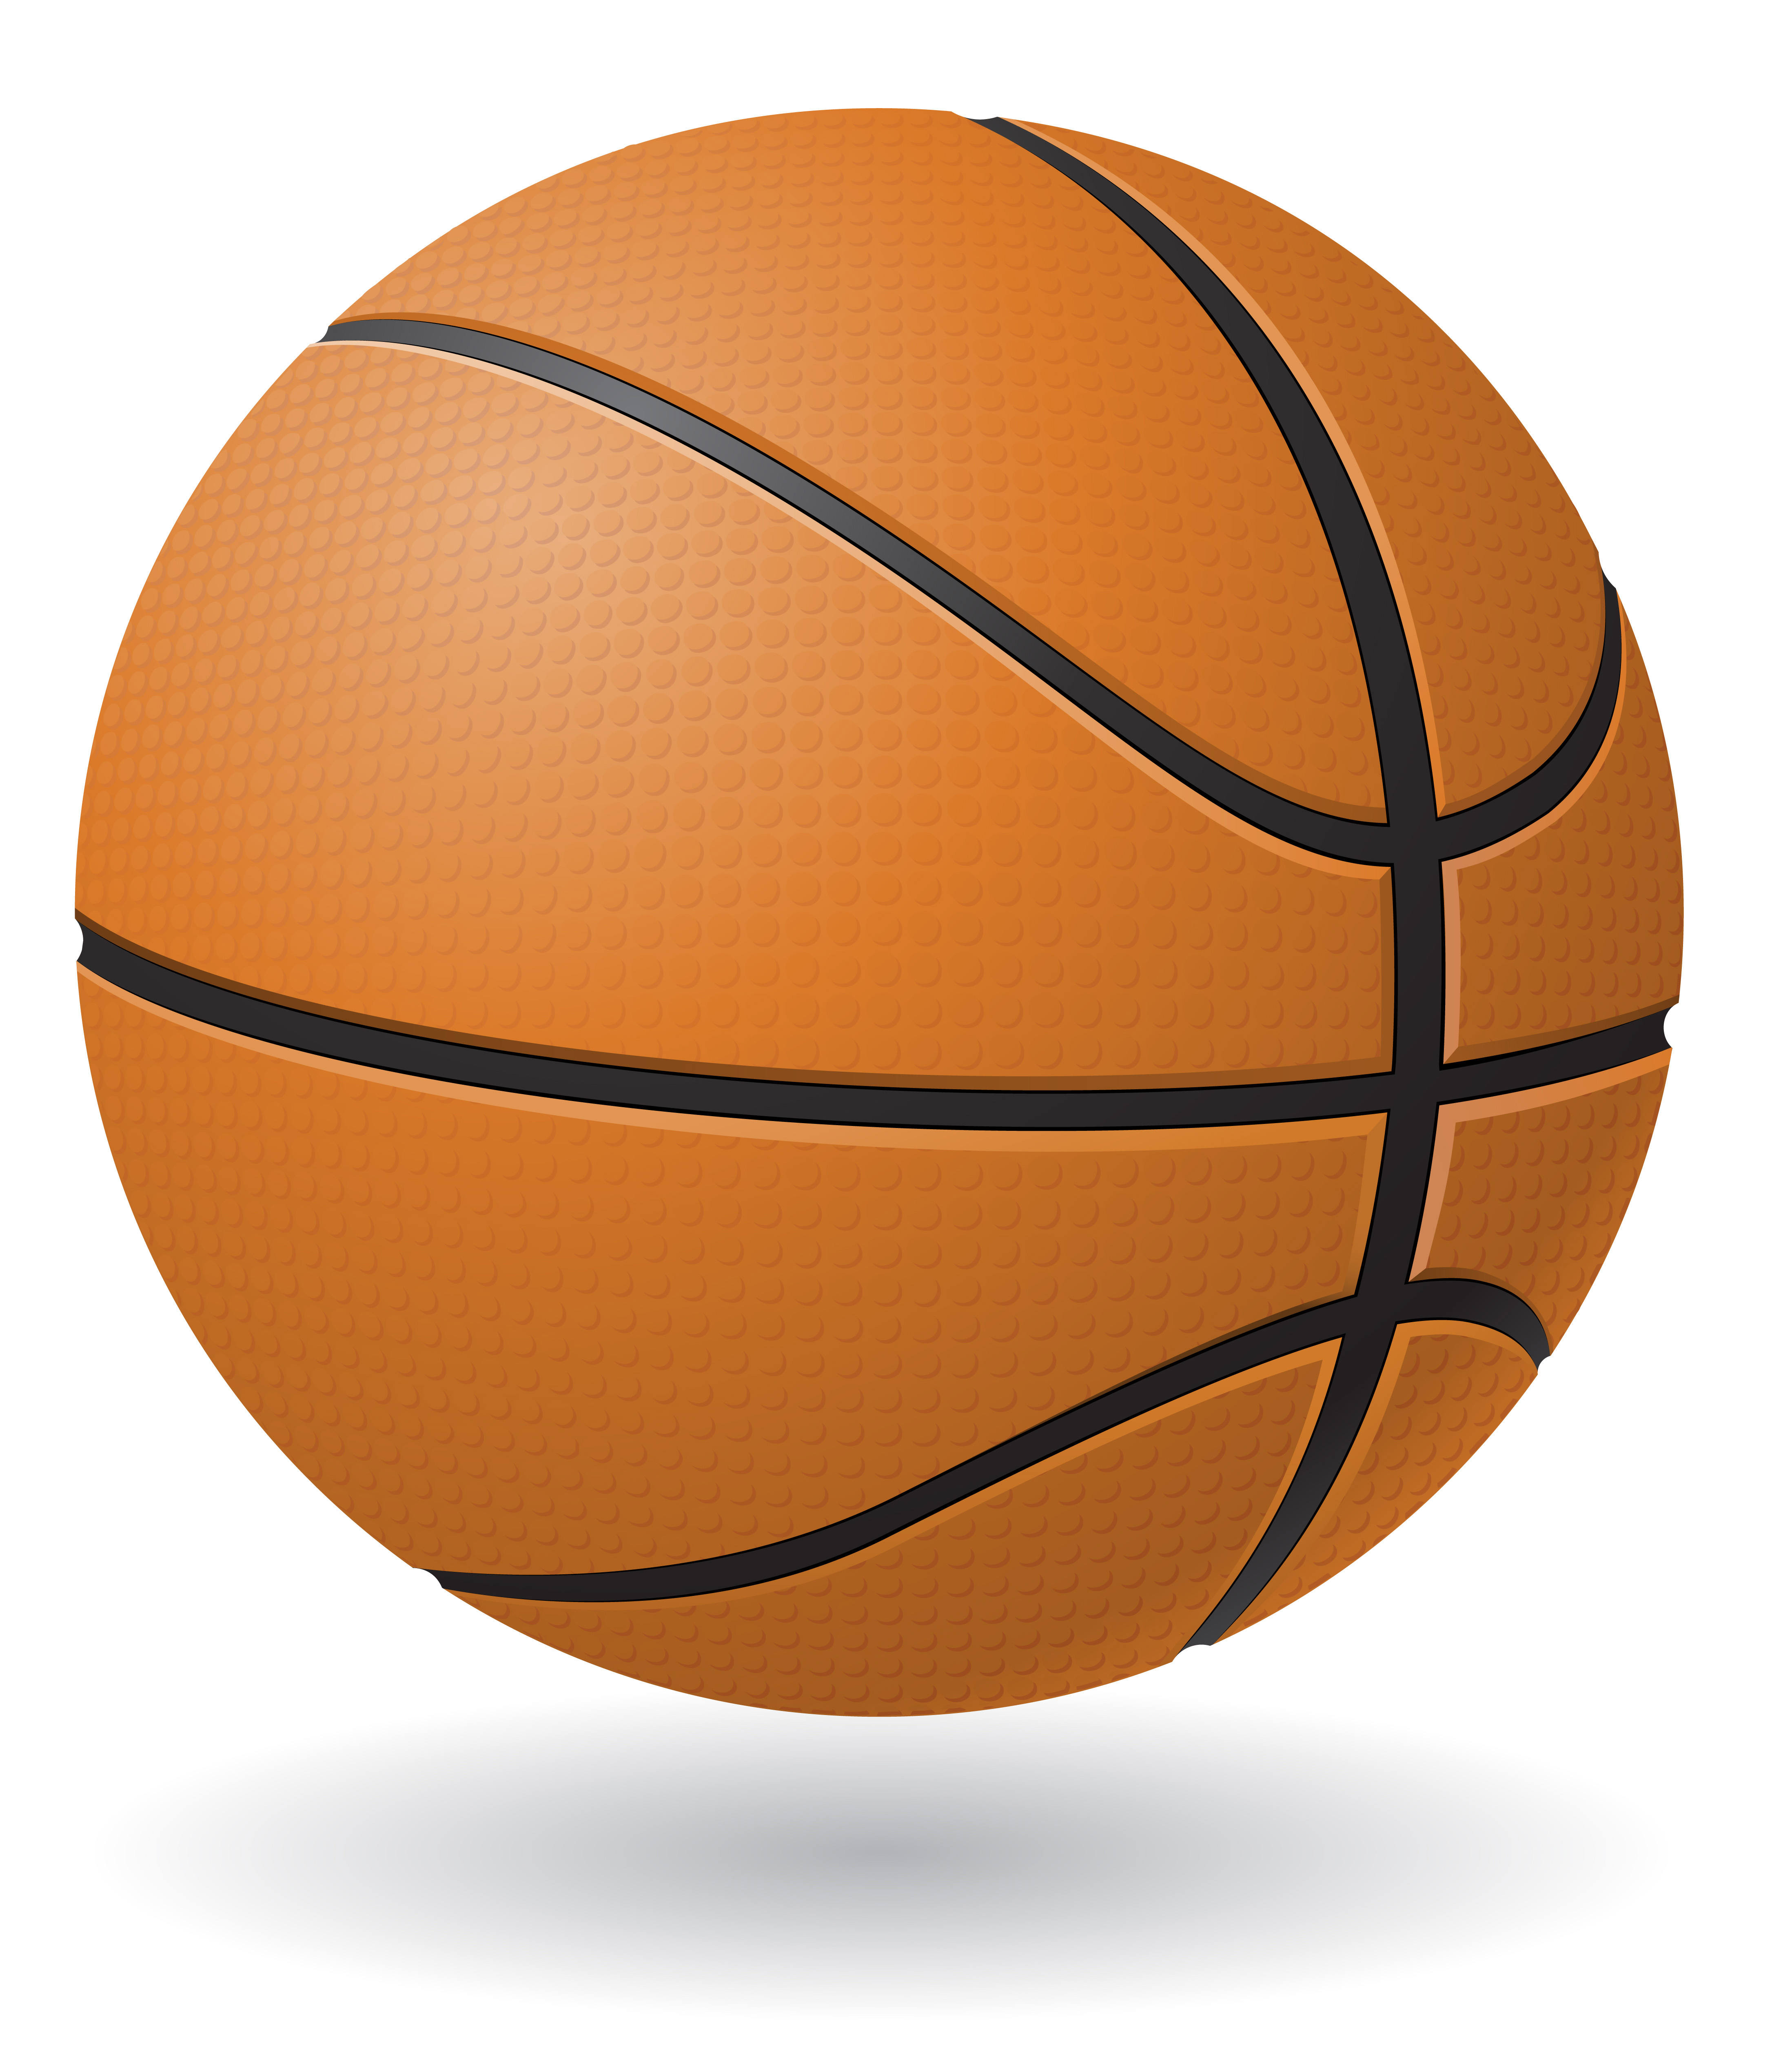 basketball ball vector illustration 516544 Download Free Vectors Clipart Graphics & Vector Art